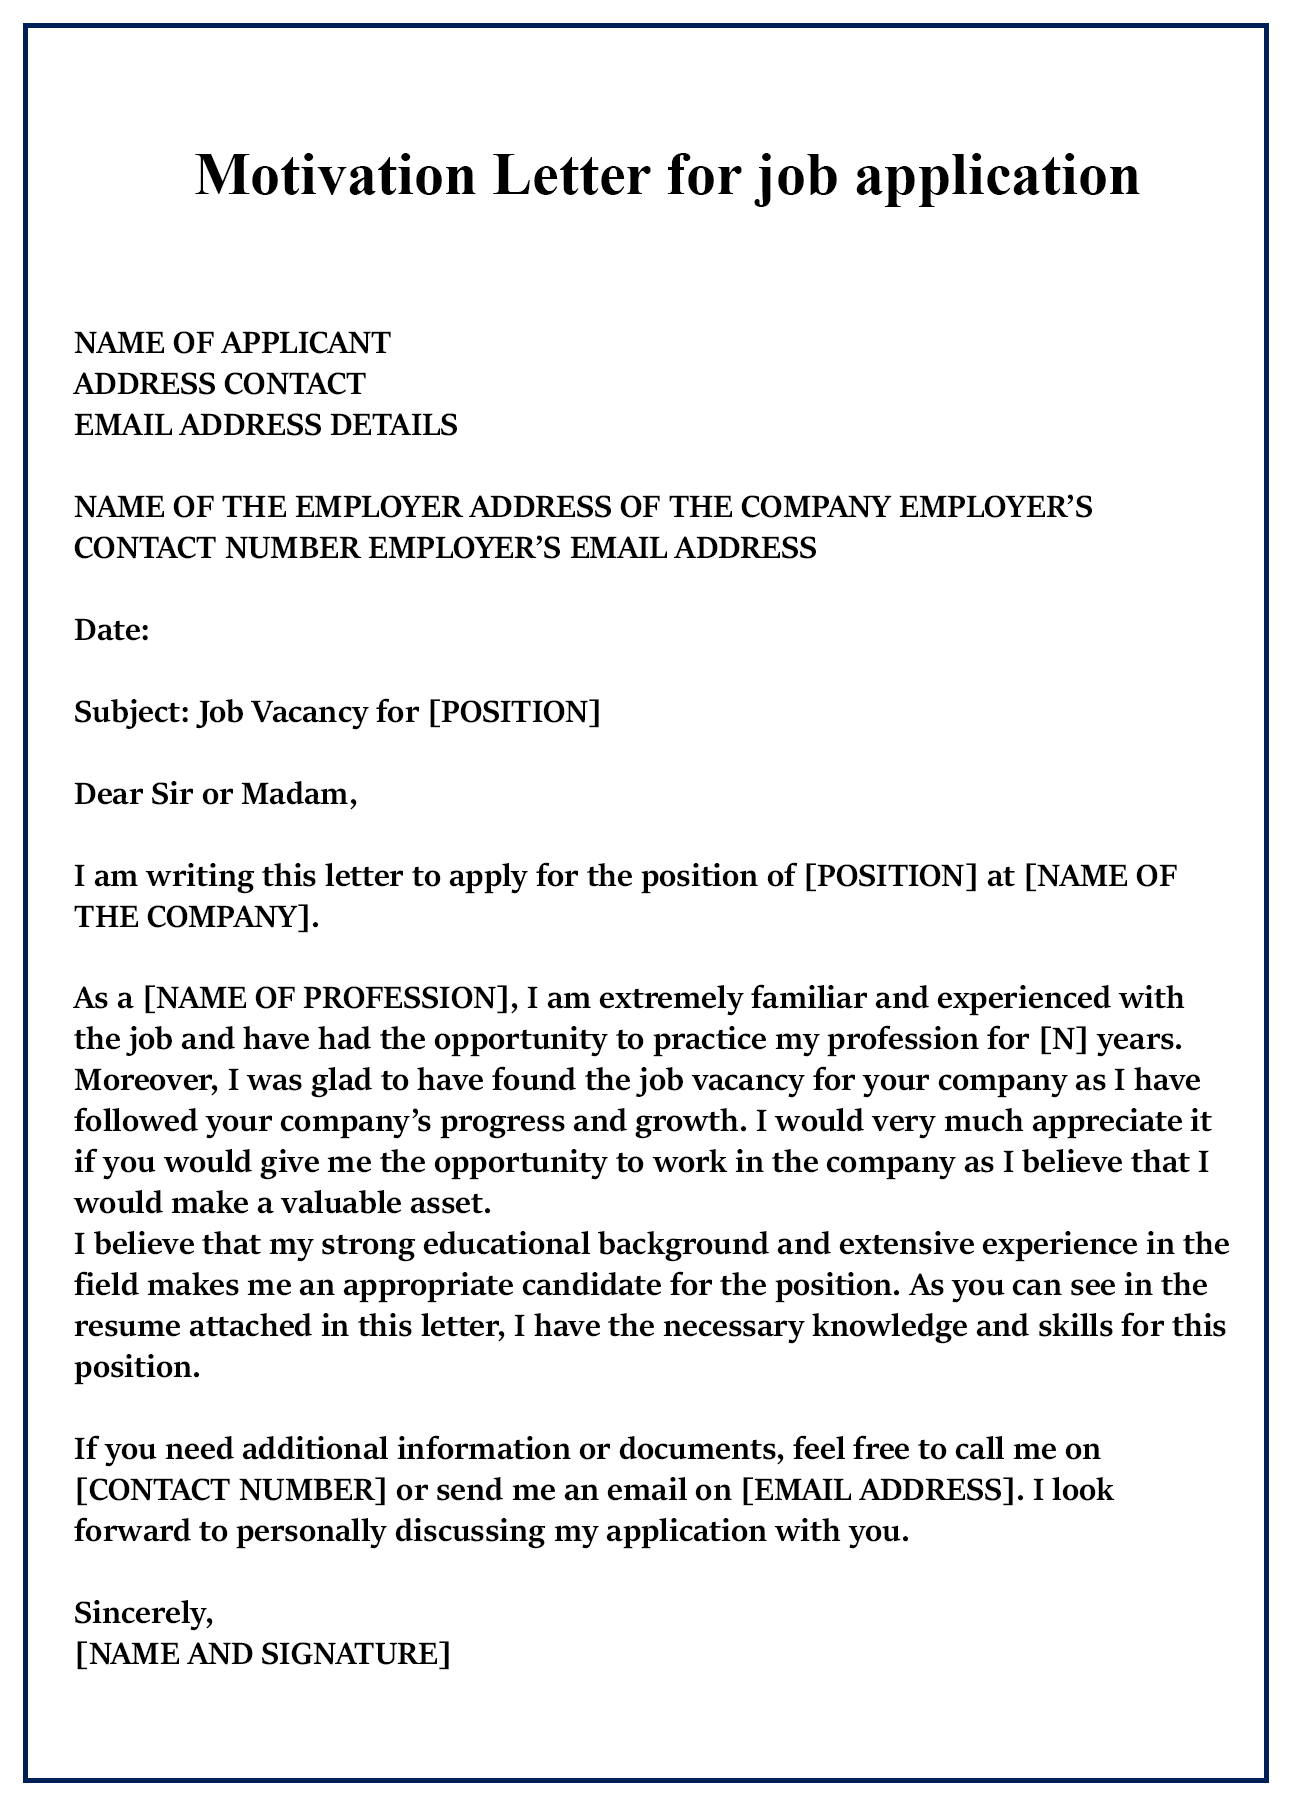 Free Sample Motivation Letter For Job Application Templates